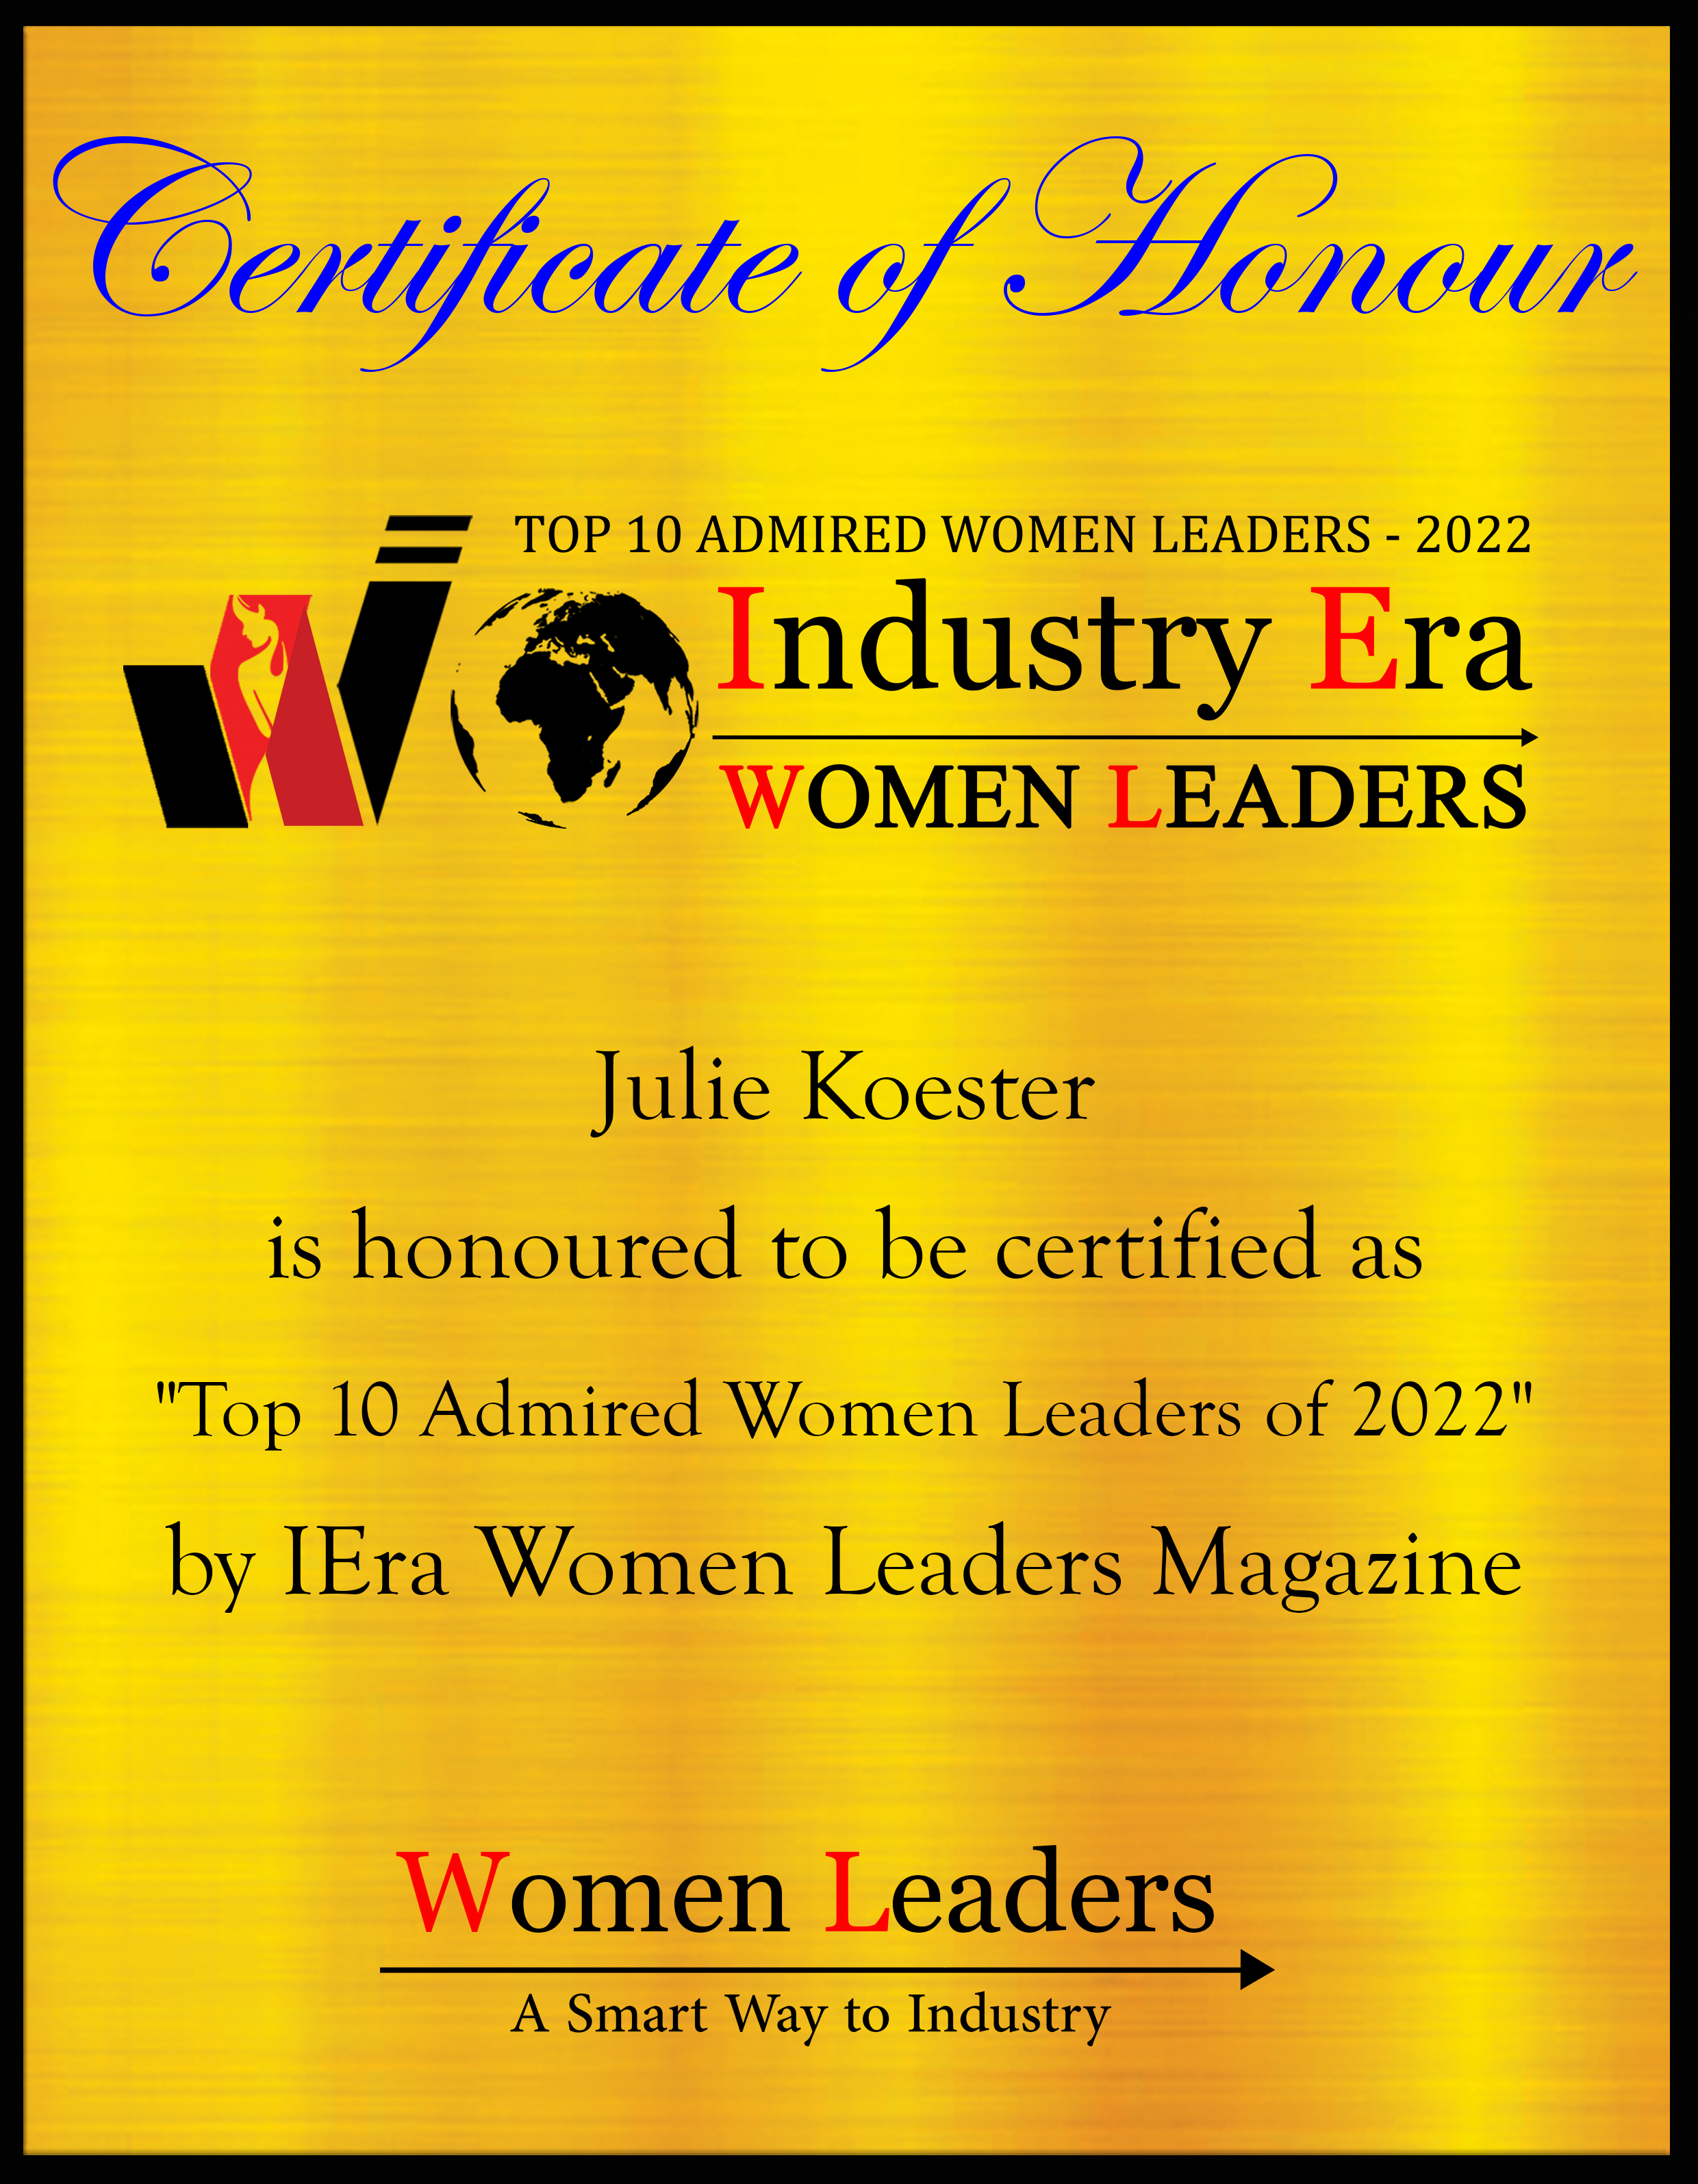 Julie Koester, Founder, Managing Partner & President of Dragon Horse Ad Agency, Top 10 Admired Women Leaders of 2022